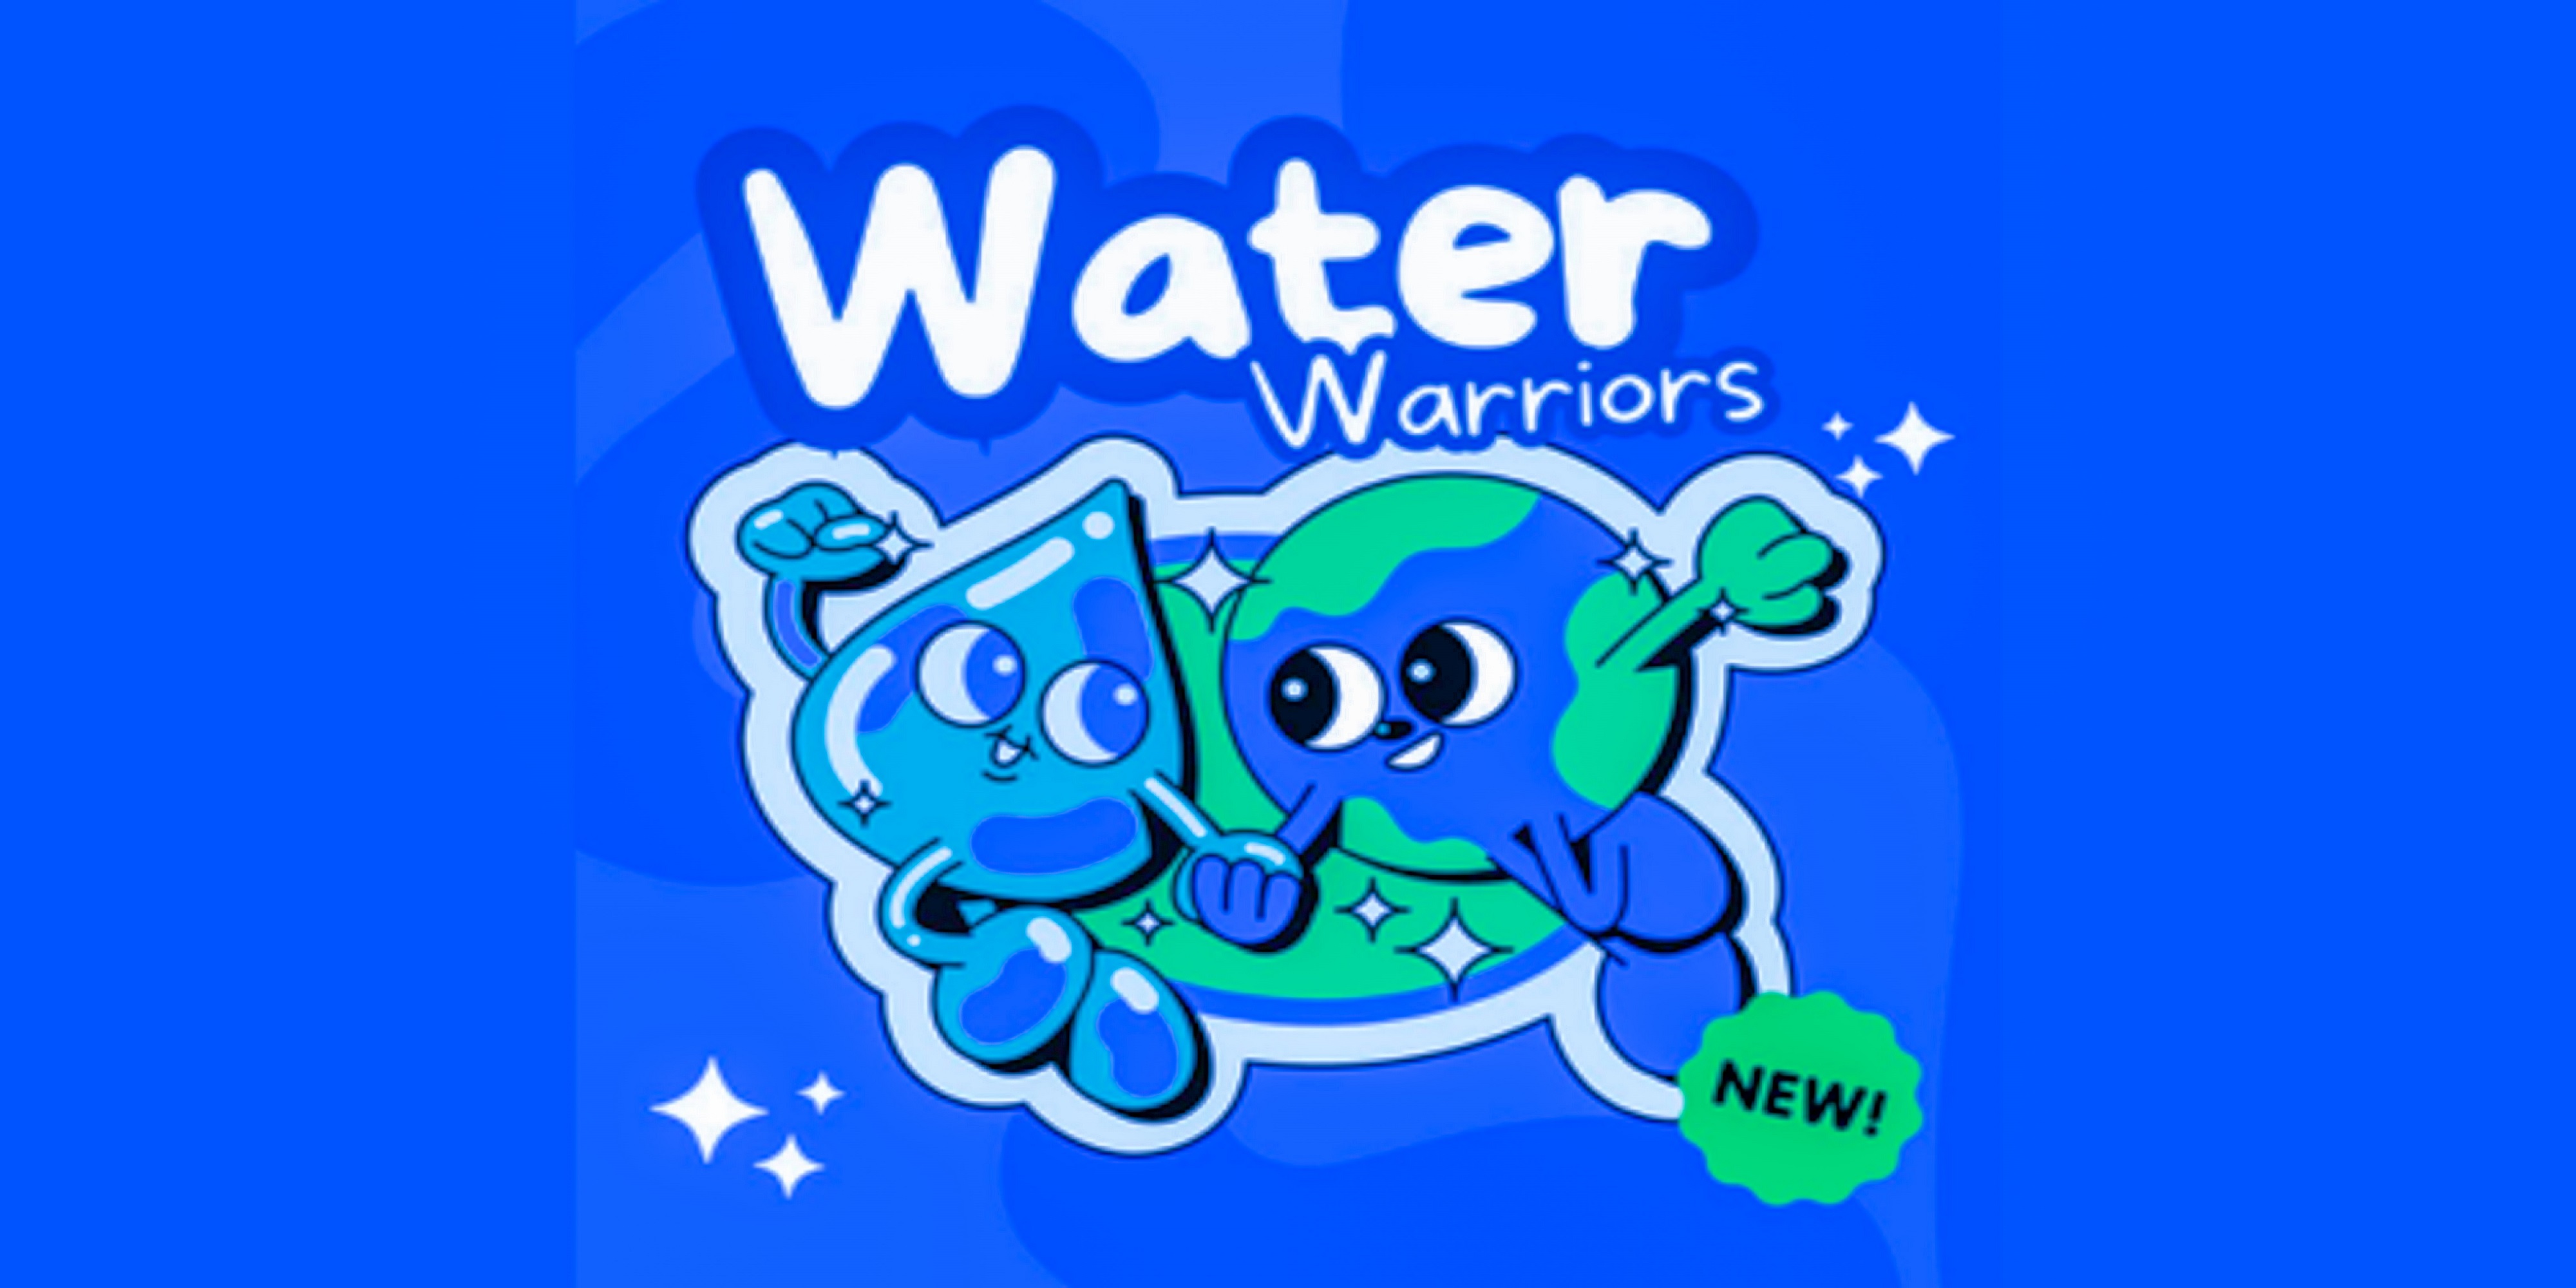 Water warriors logo in blue